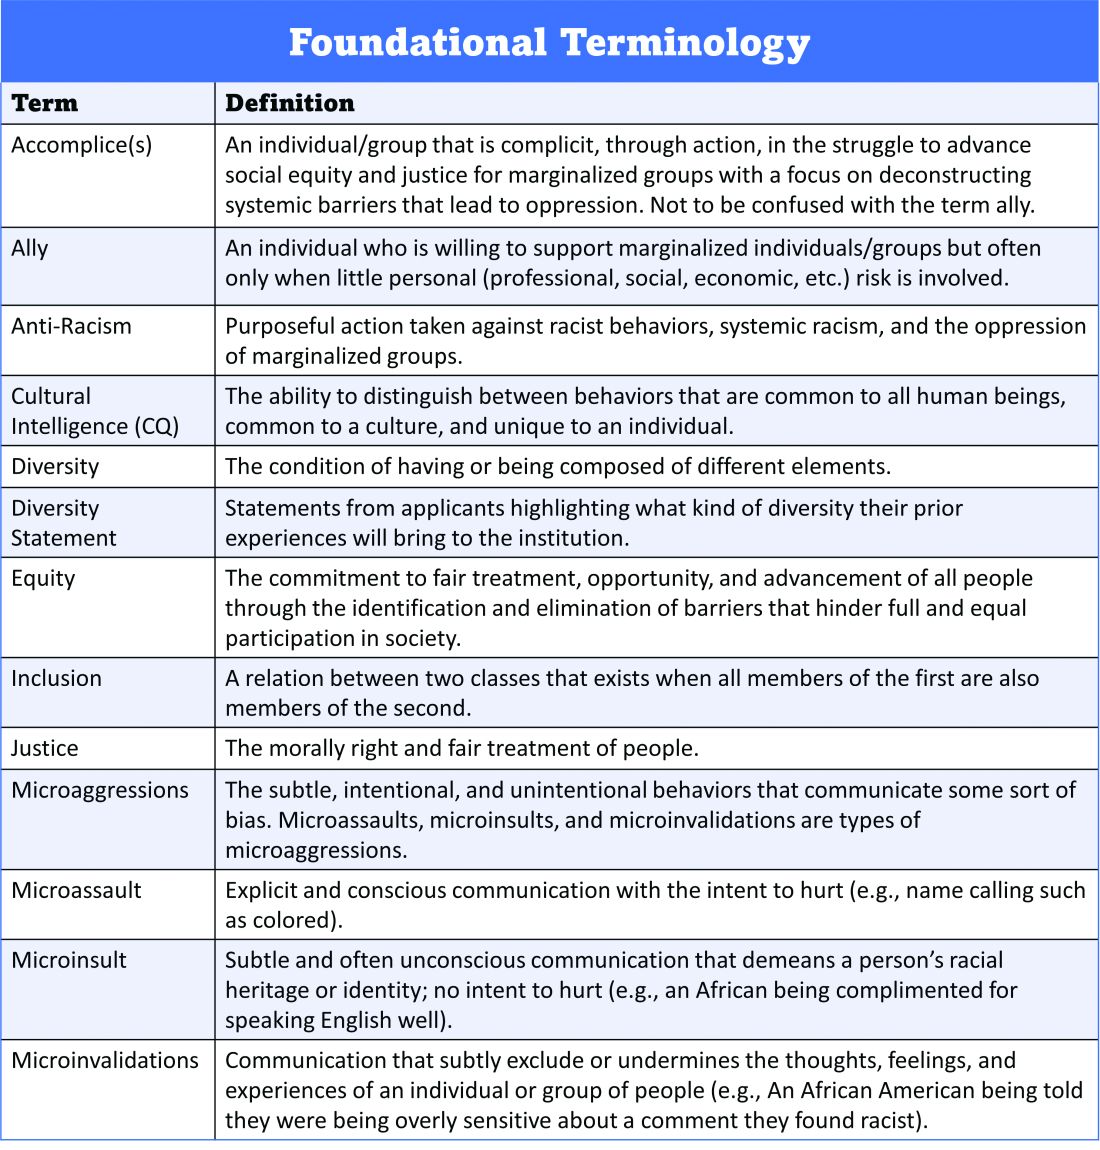 Foundational terminology